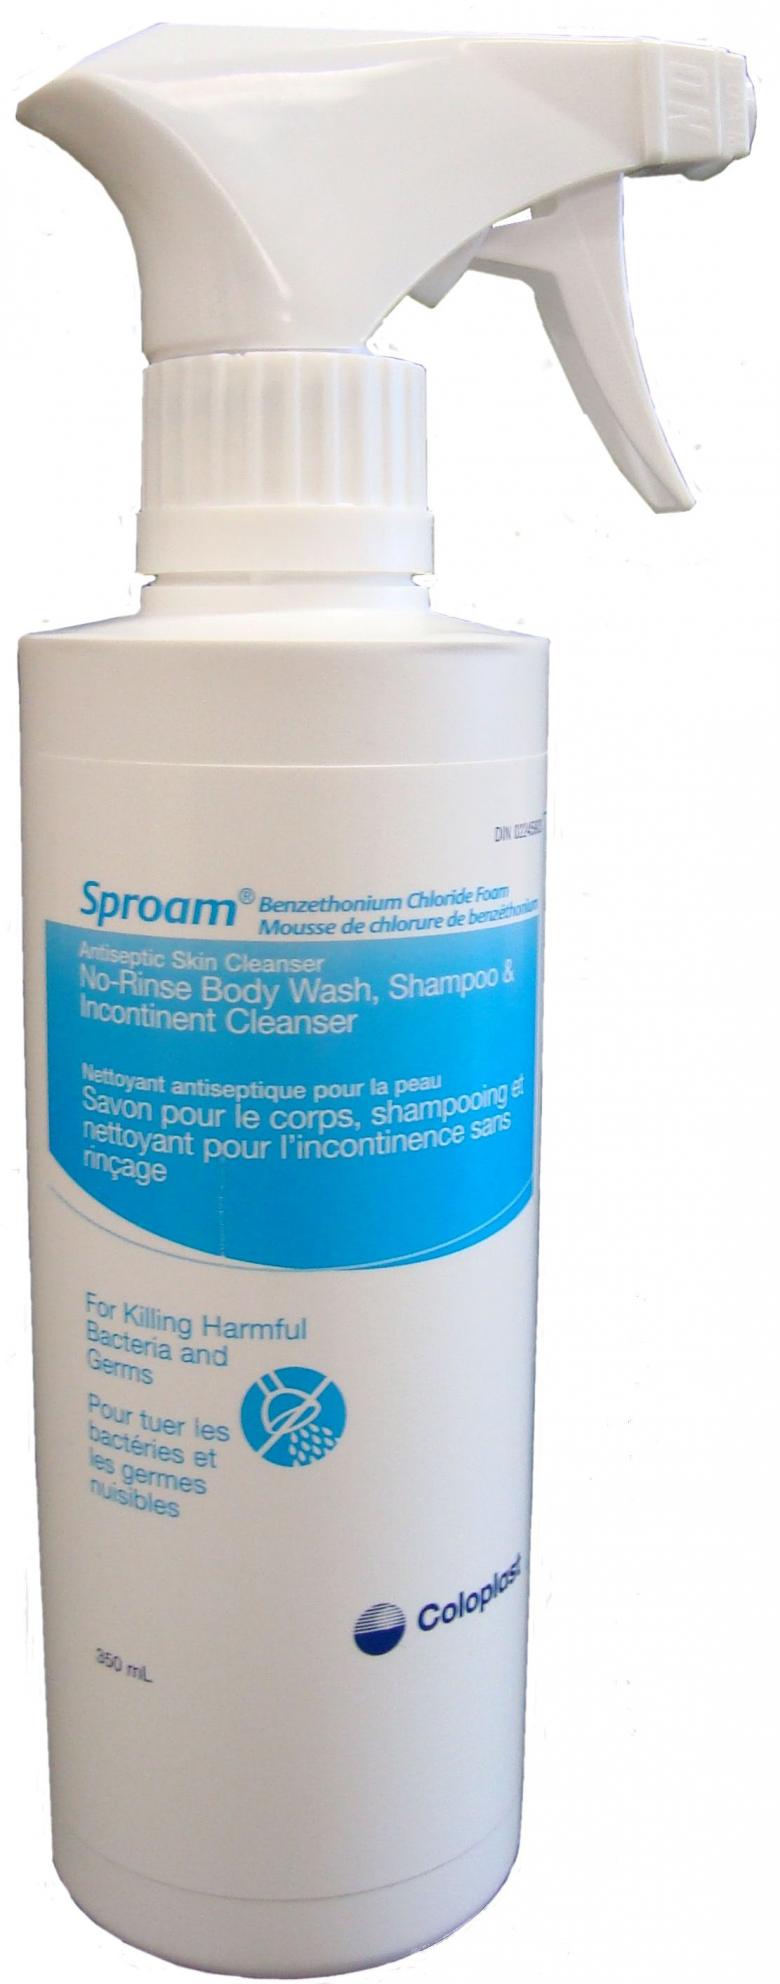 Coloplast 897 Sproam®, Benzethonium Chloride Antiseptic No-Rinse All Body Spray/ Foam Cleanser 175 ML Ostomy